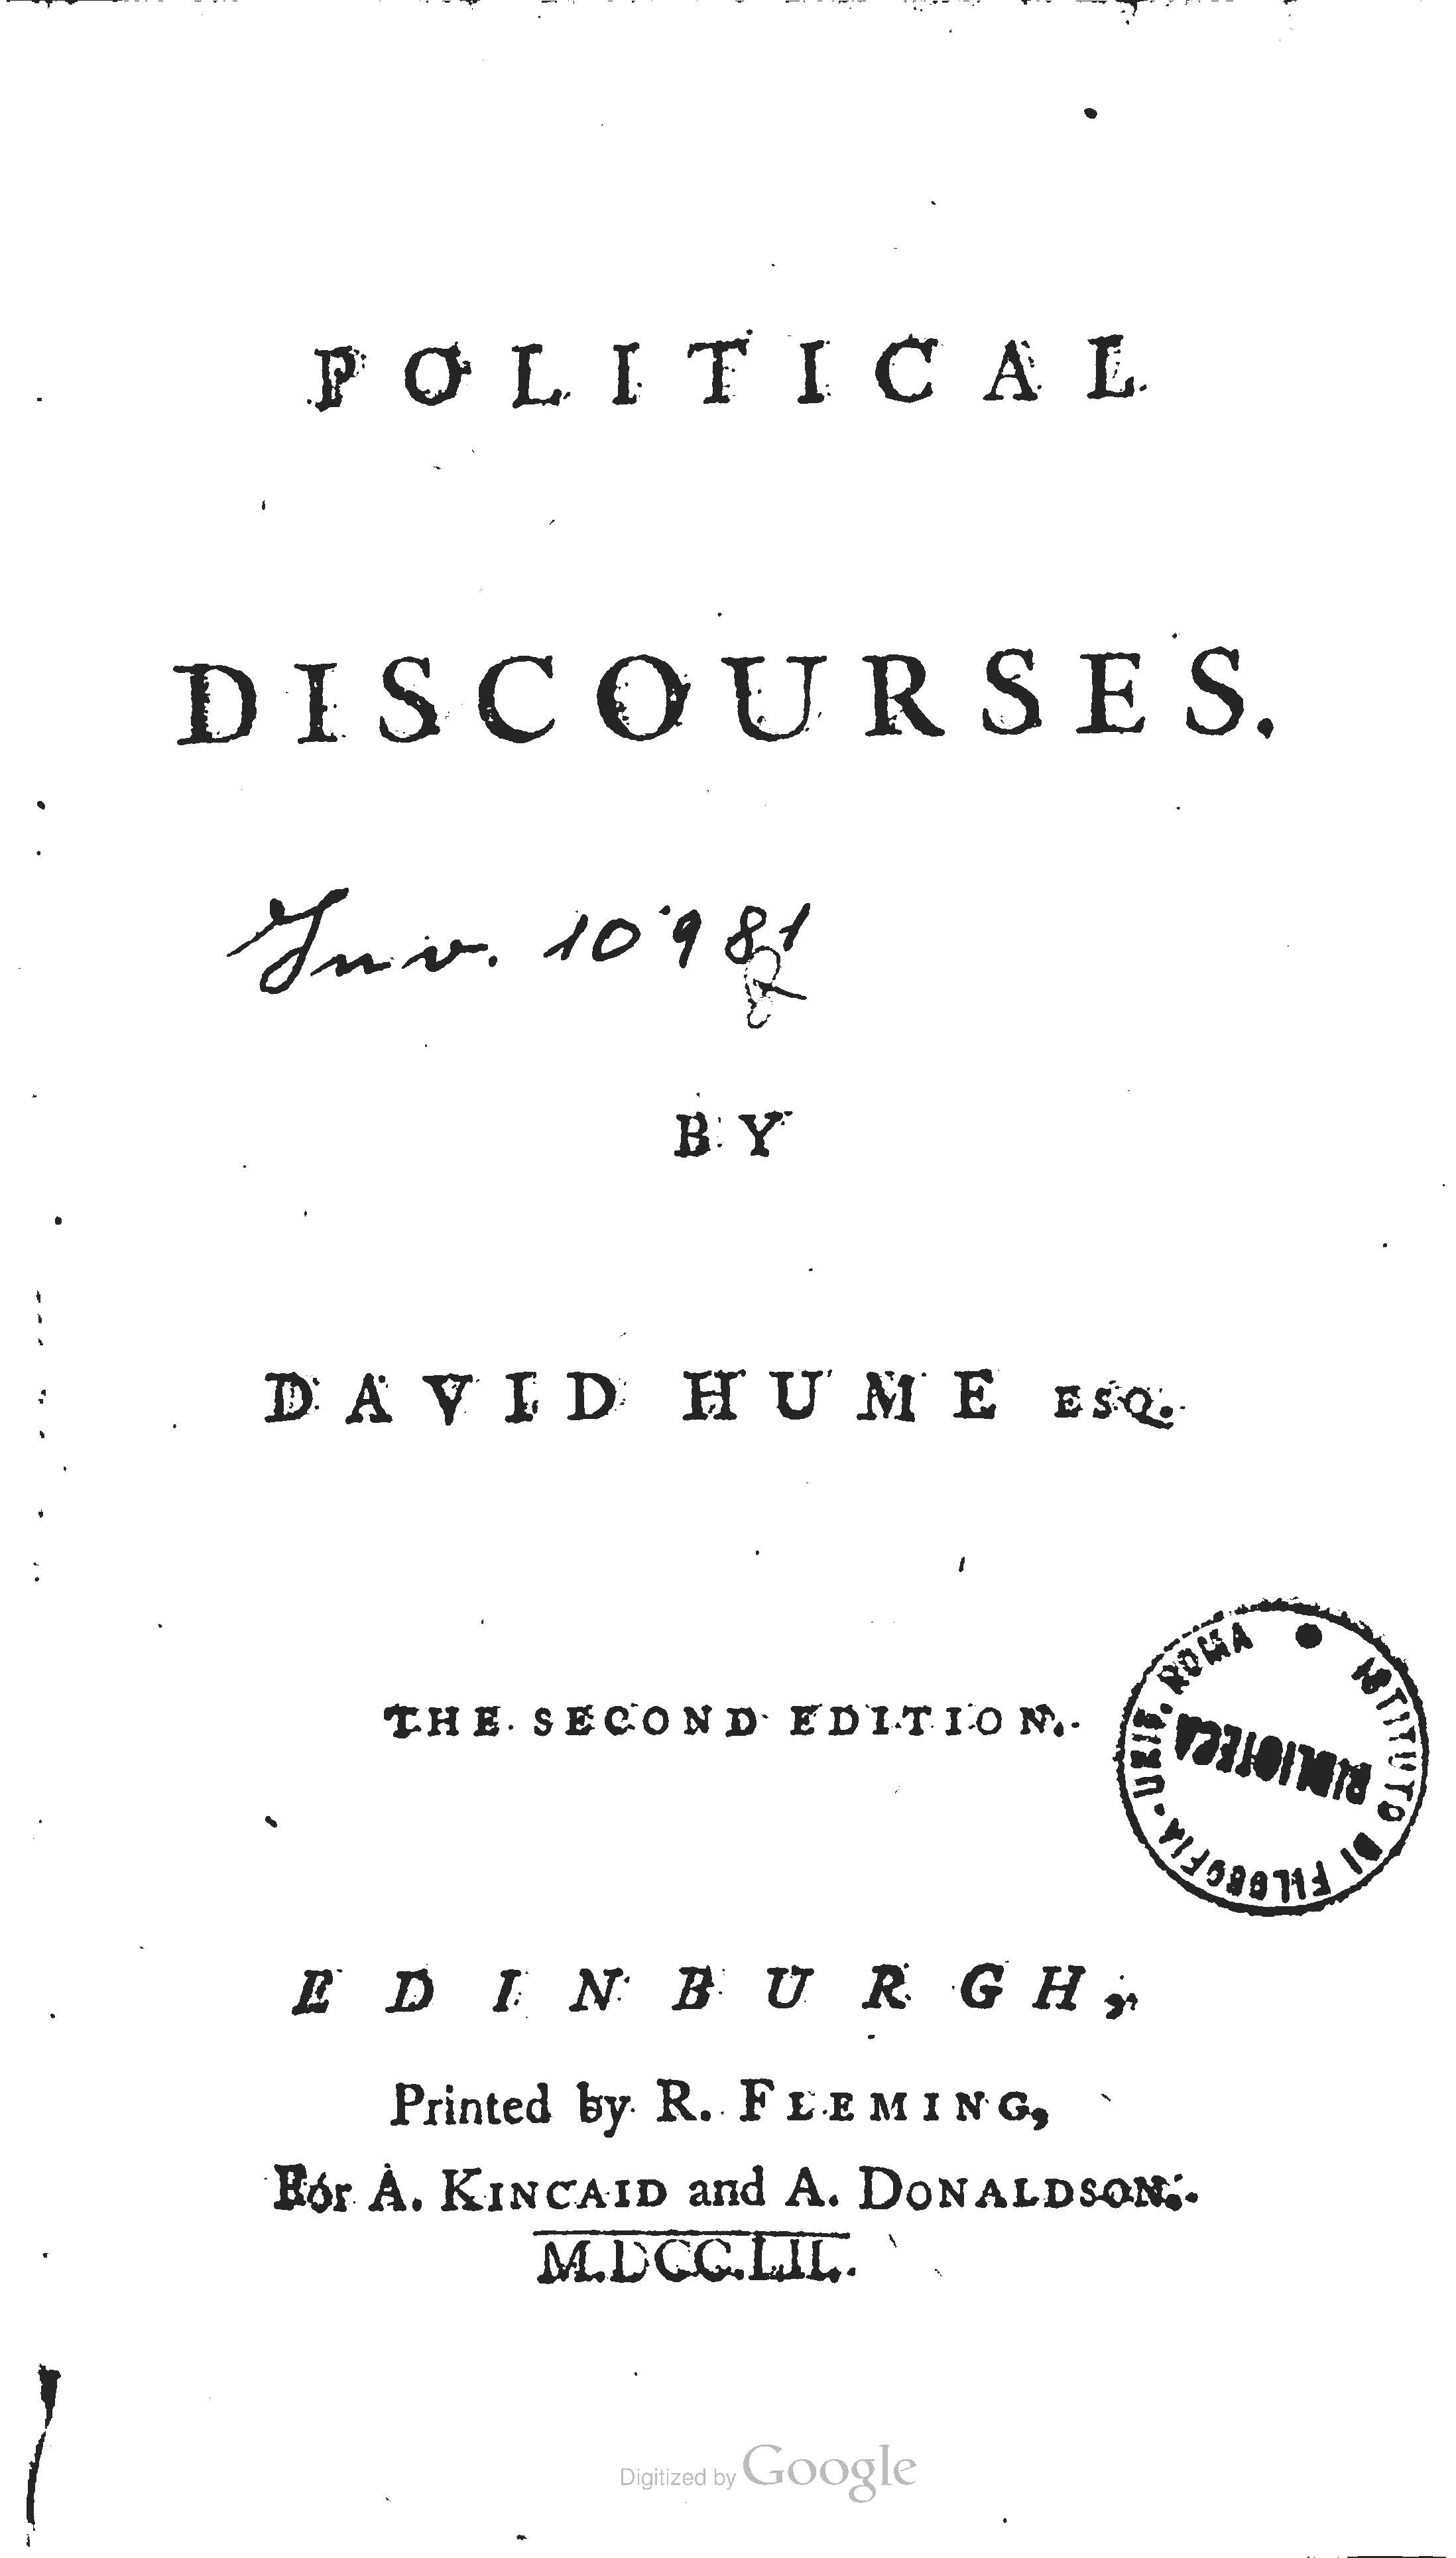 David Hume, Esq. (Apr. 18, 1776). Political Discourses, 321 pgs., pg. 8. R. Fleming.